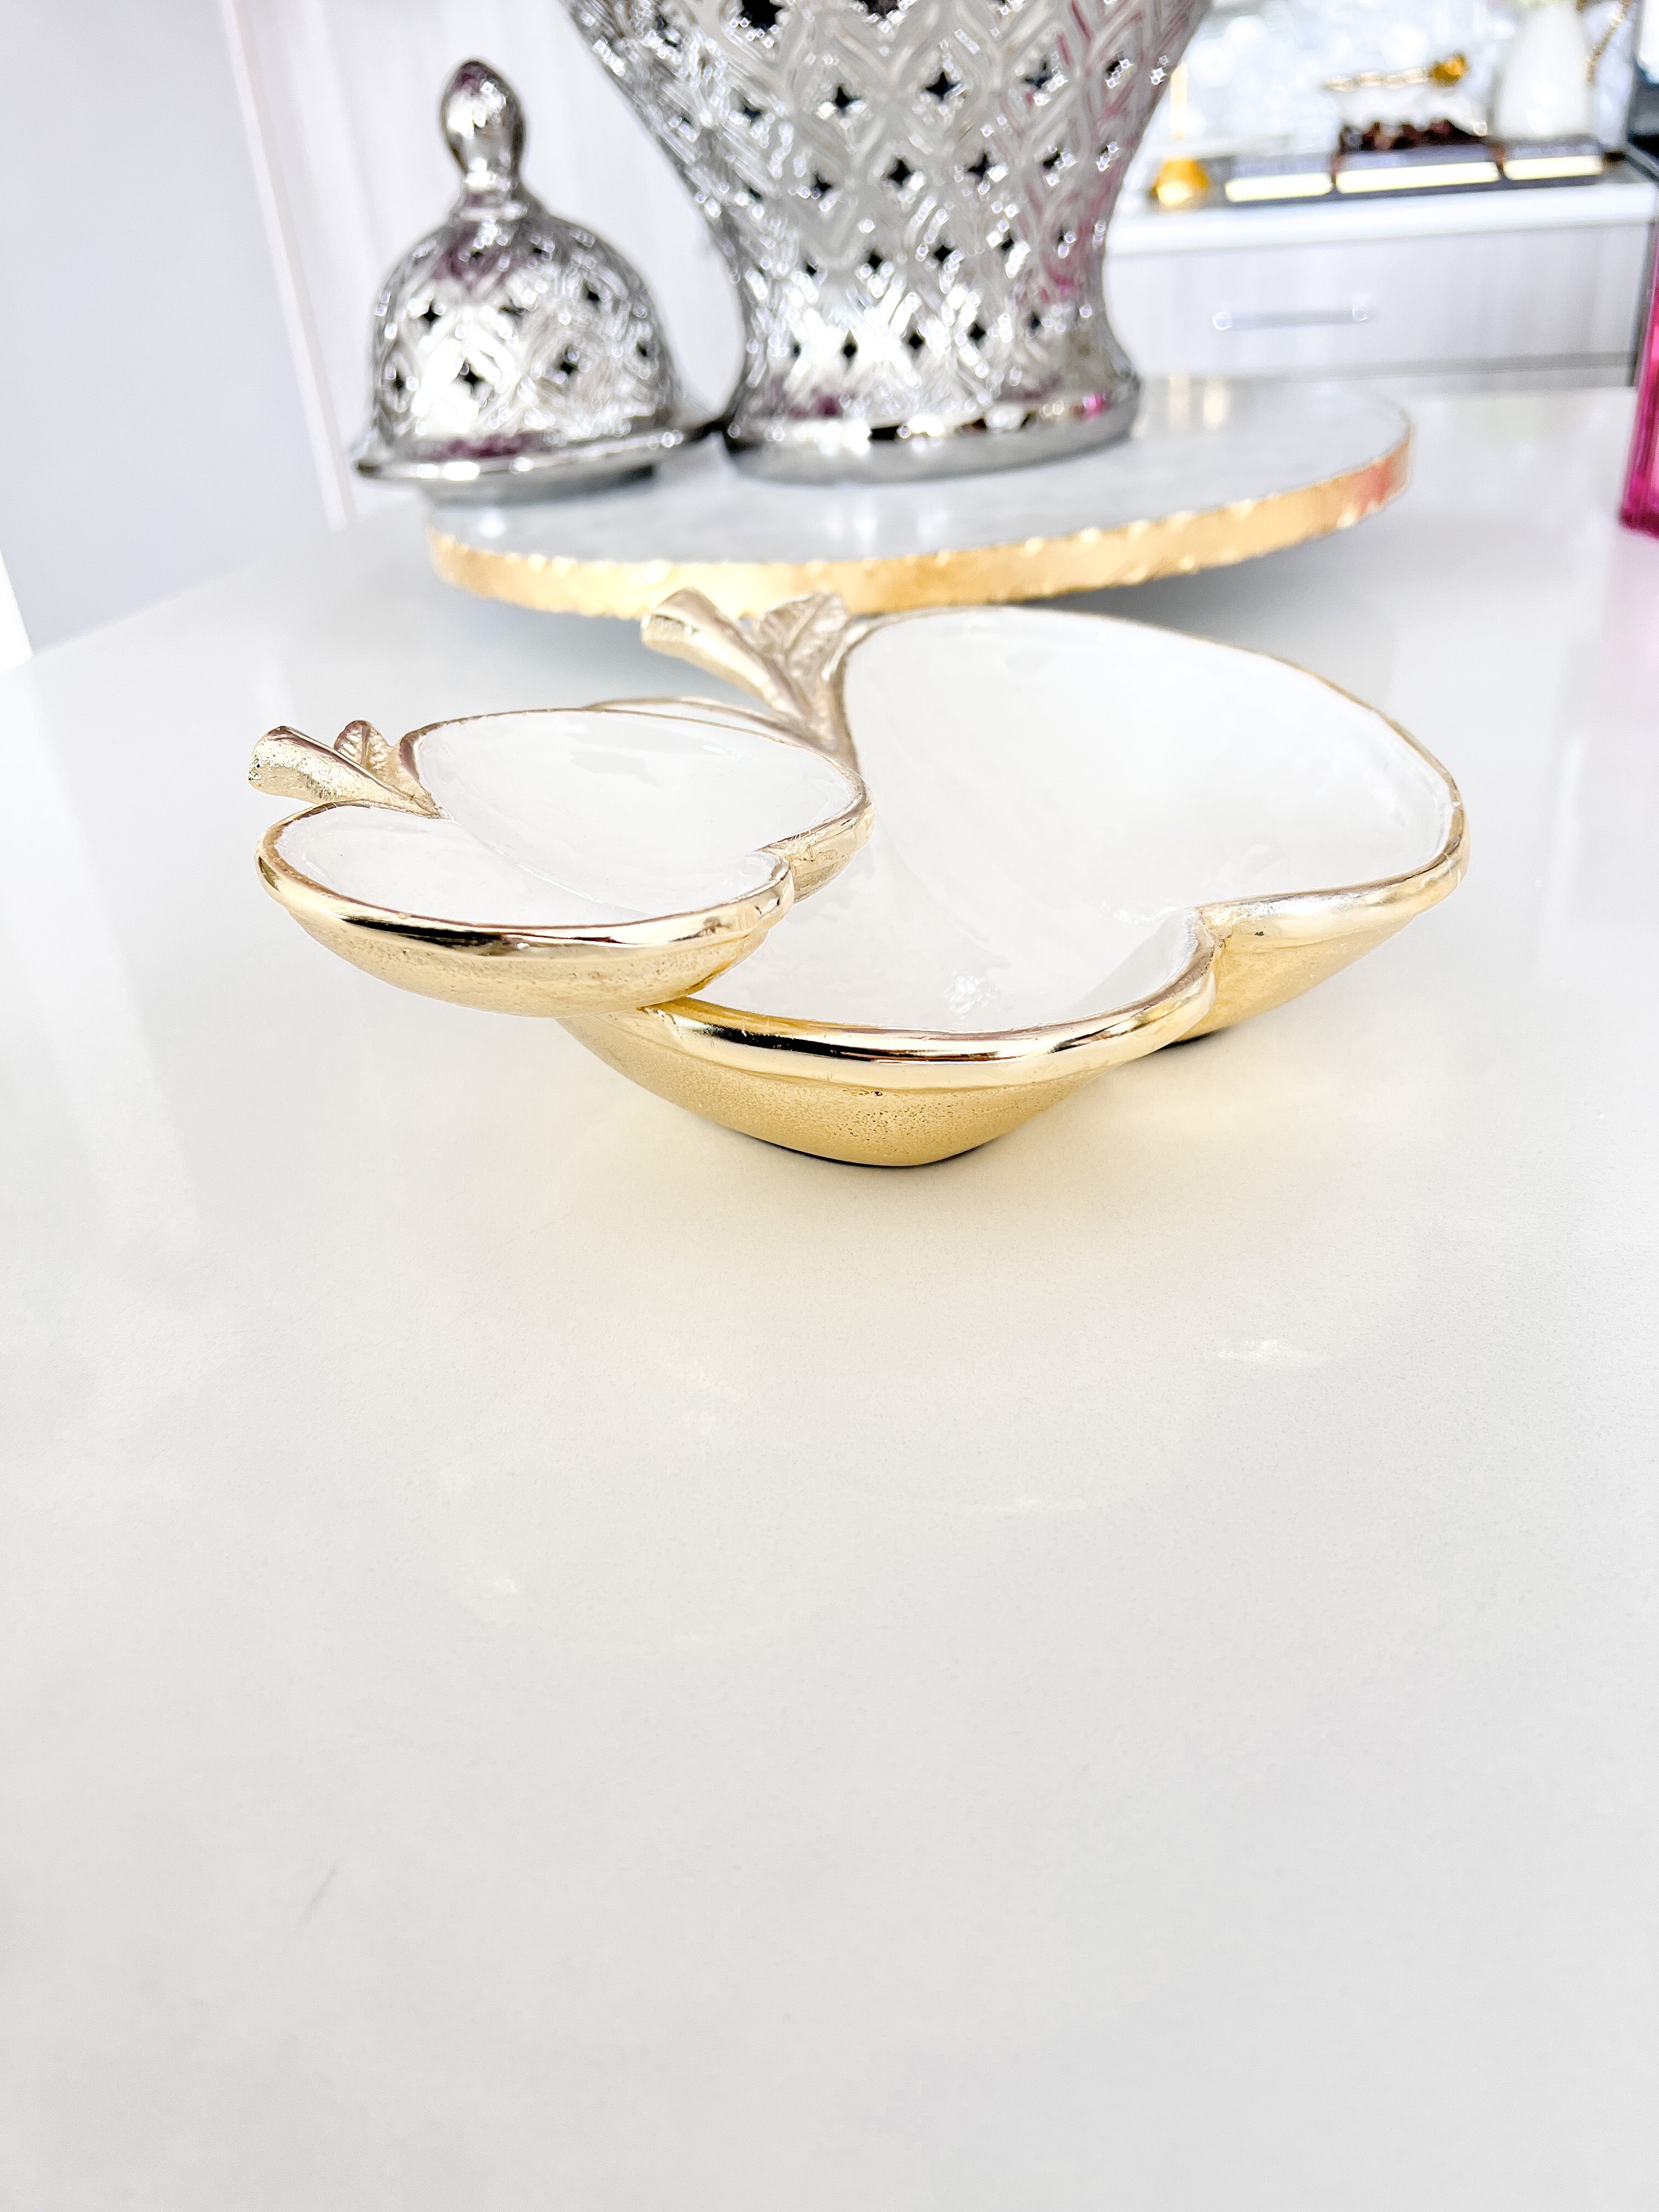 Gold Apple Shape Snack Bowl/ Dish - HTS HOME DECOR